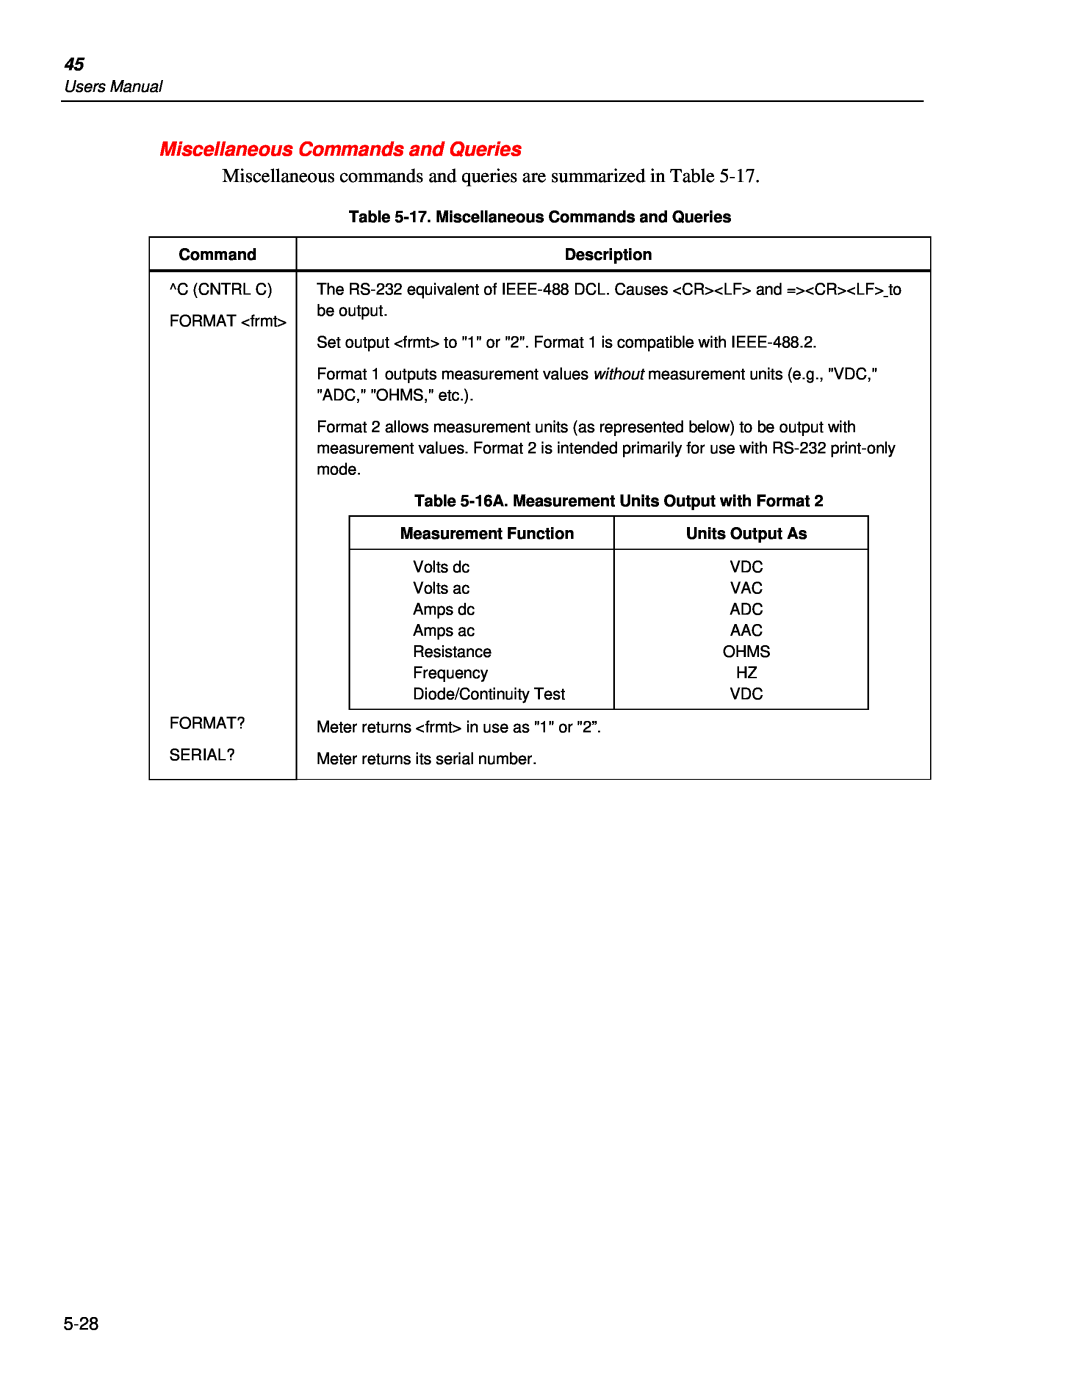 Fluke 45 user manual 5-28, 17.Miscellaneous Commands and Queries, Description, 16A.Measurement Units Output with Format 